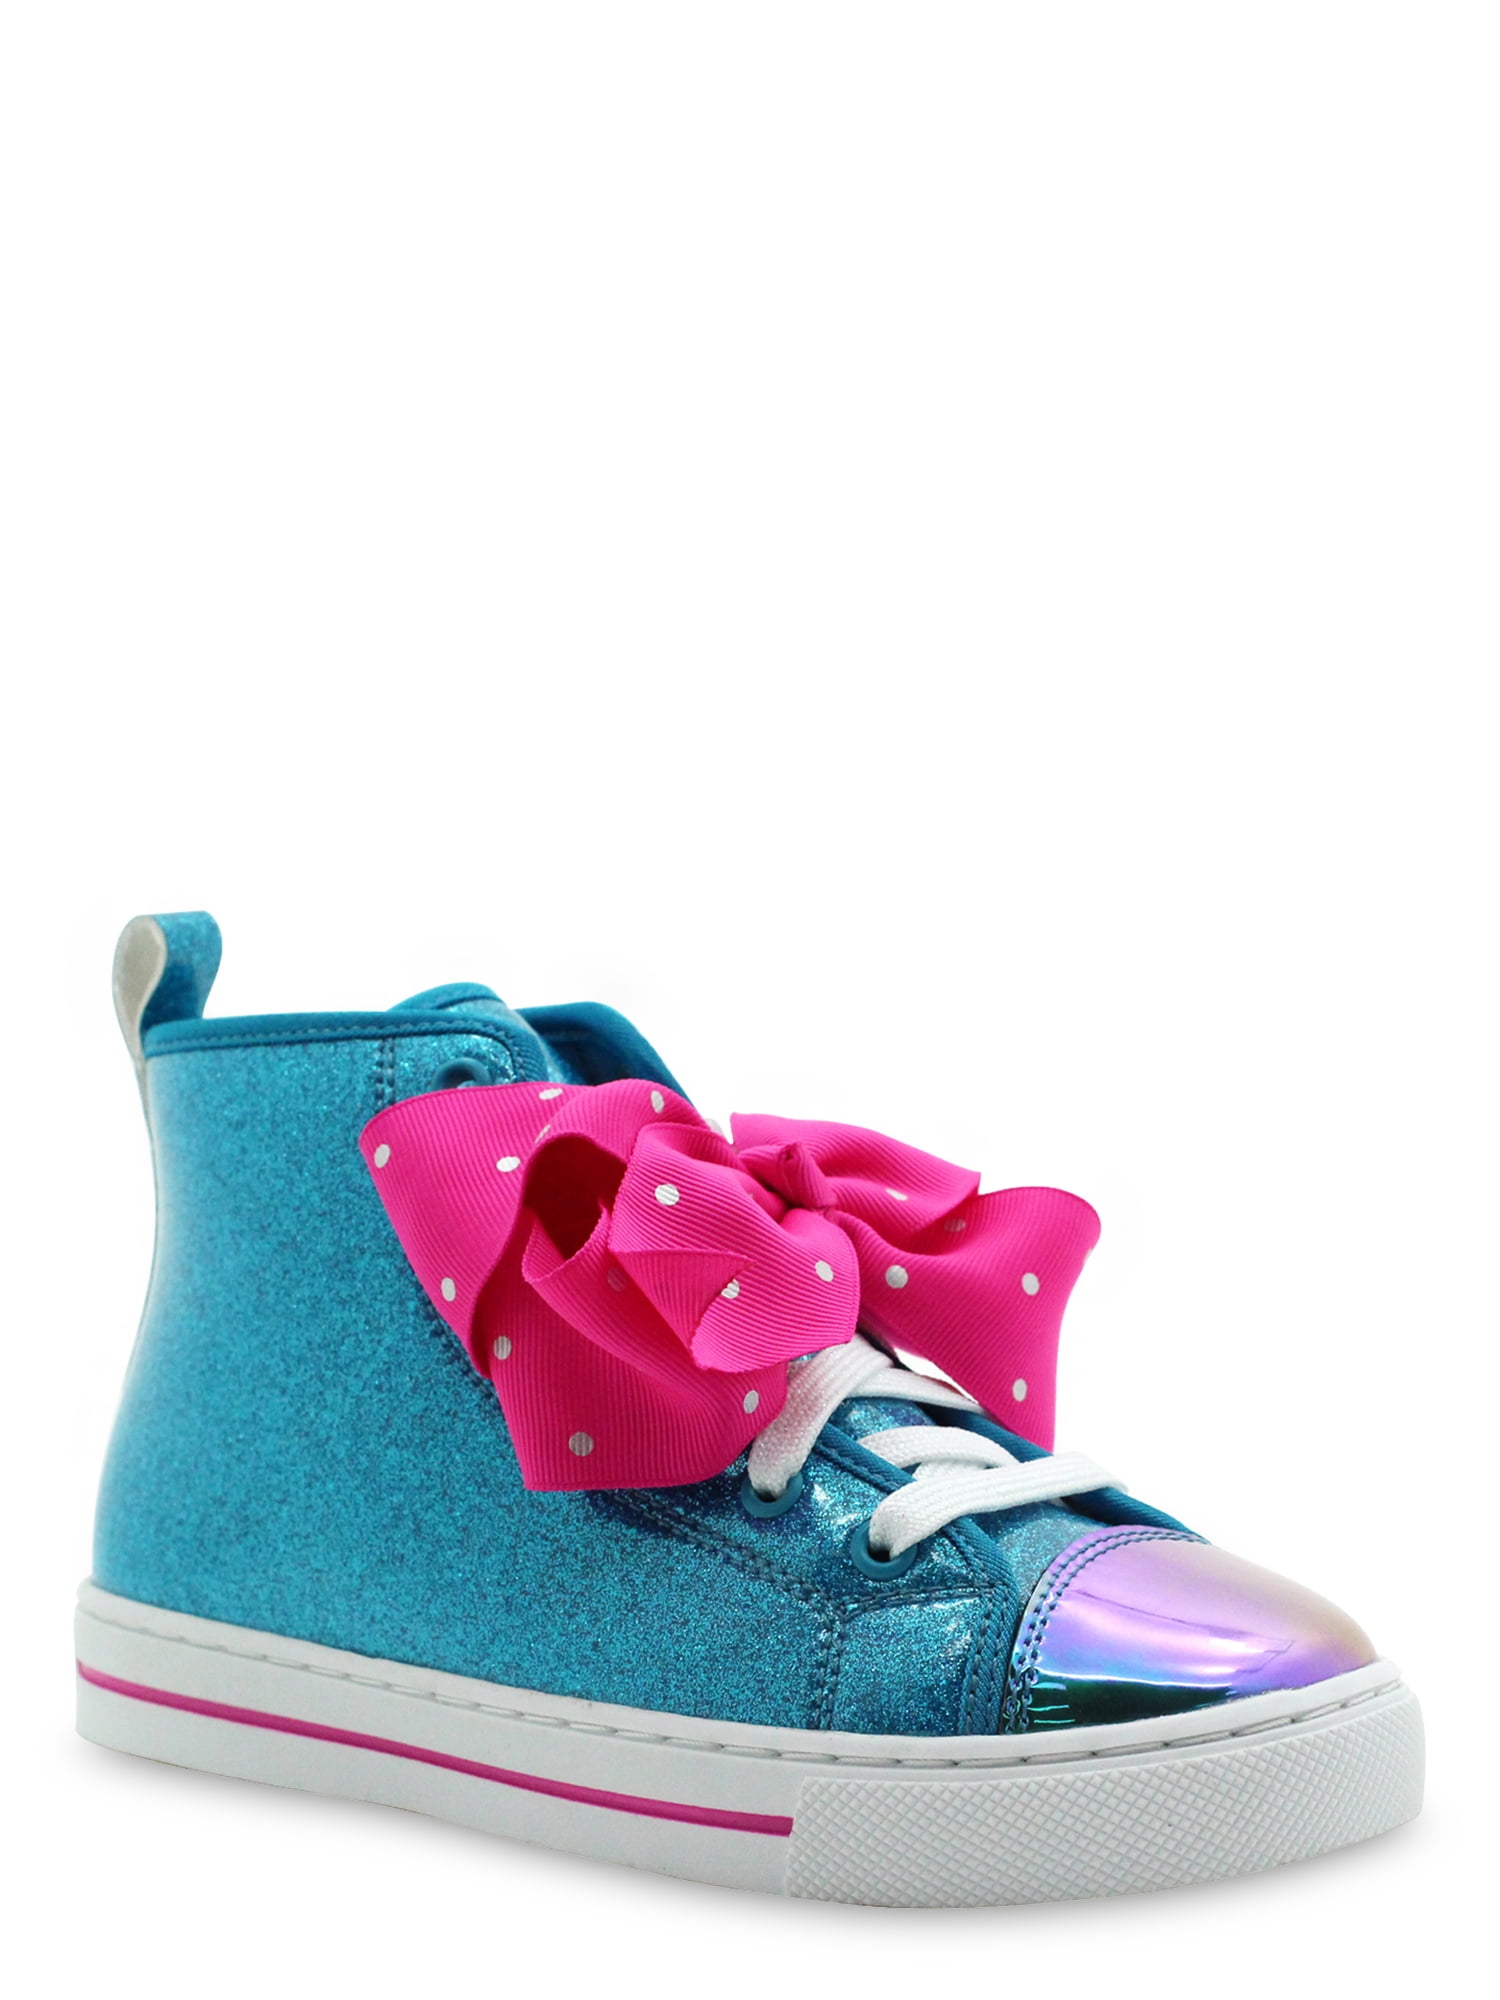 JoJo Siwa Kids \u0026 Baby Shoes - Walmart.com